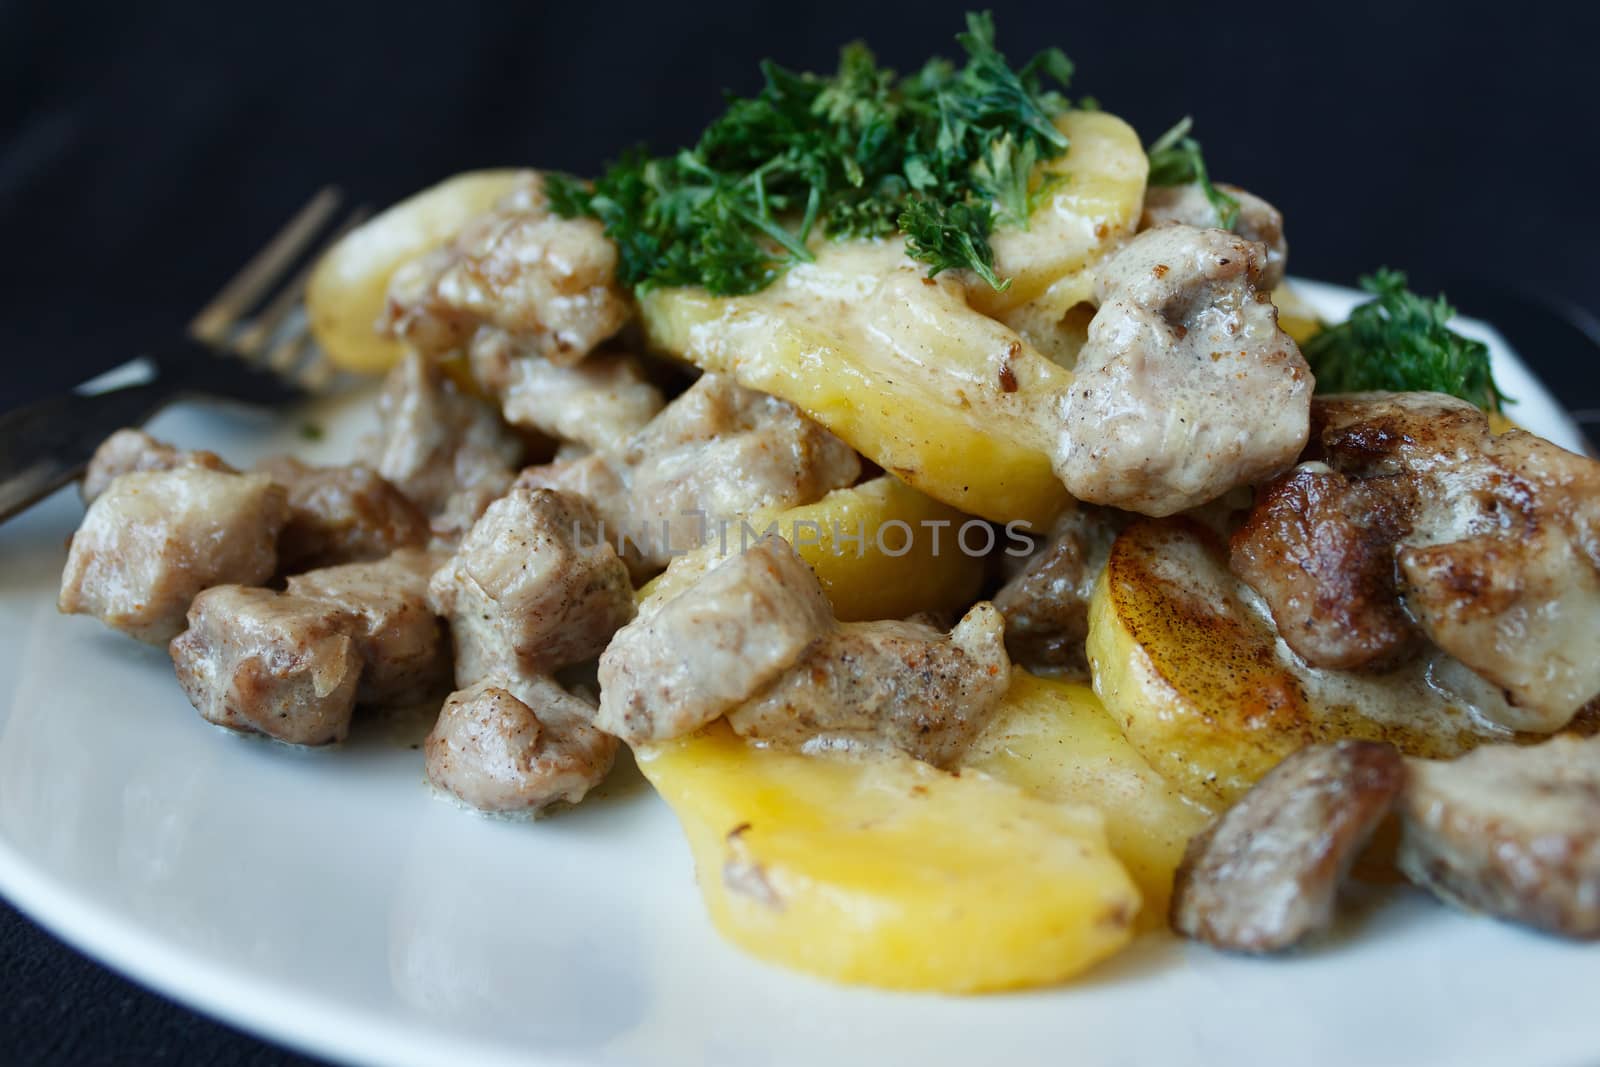 Photos: 29.  December 2015 Jablonec nad Nisou, Czech Republic scalloped potatoes with pork sauce on a white platter